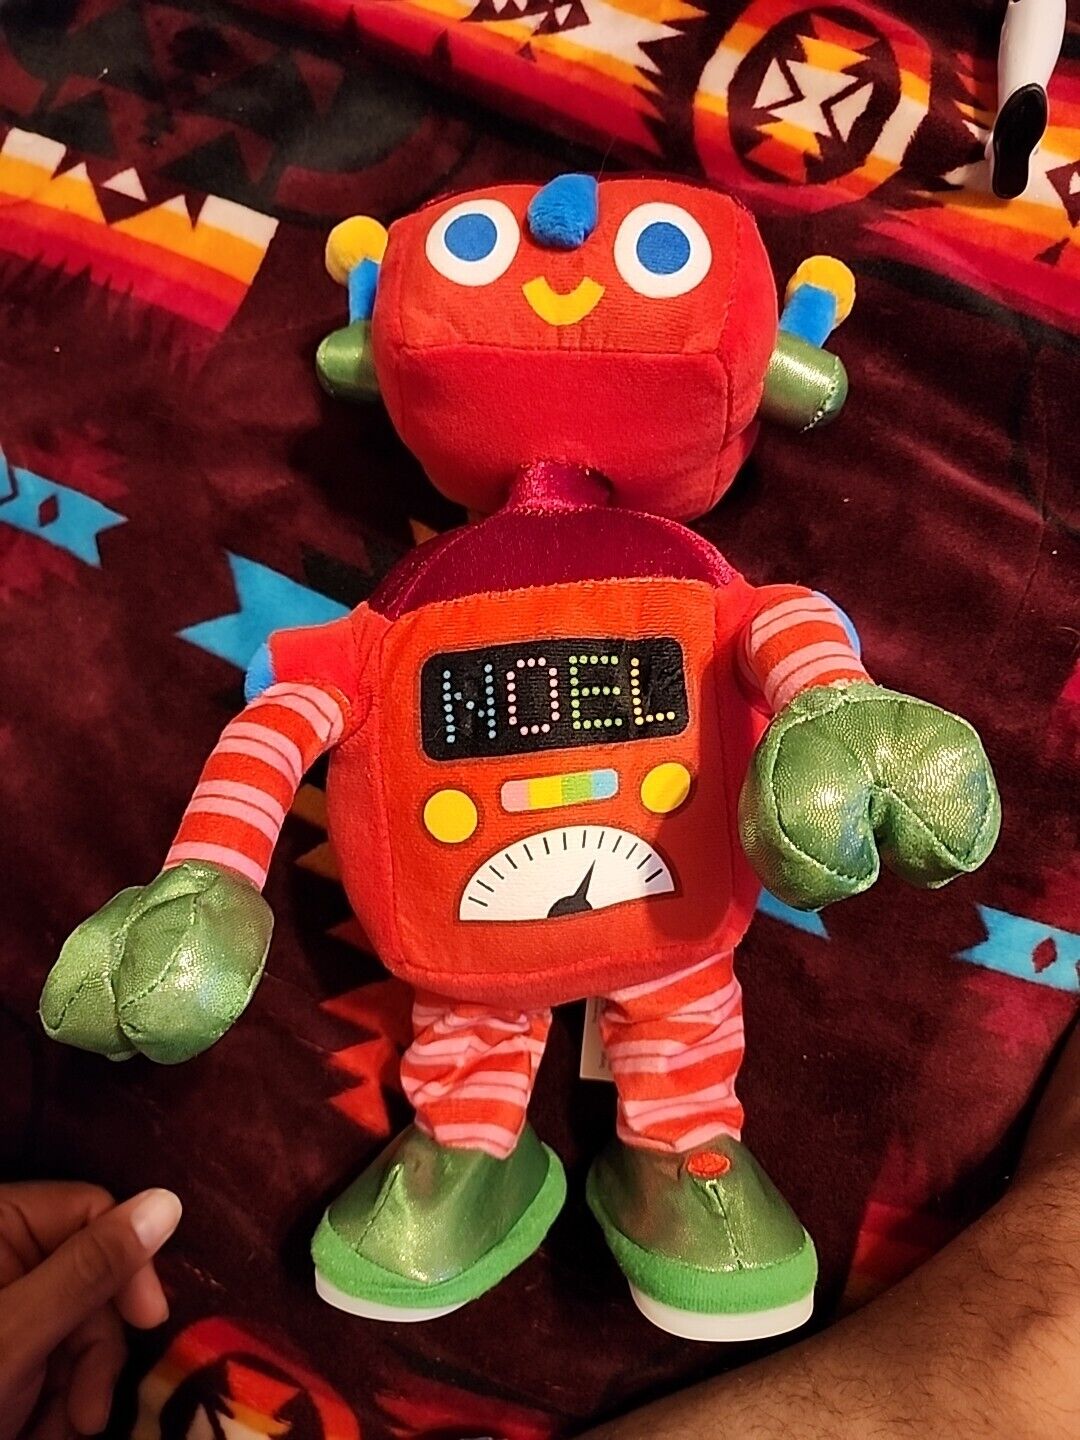 Gemmy Target Christmas Noel Robot Animated Singing Robot Sleigh Ride Plush READ